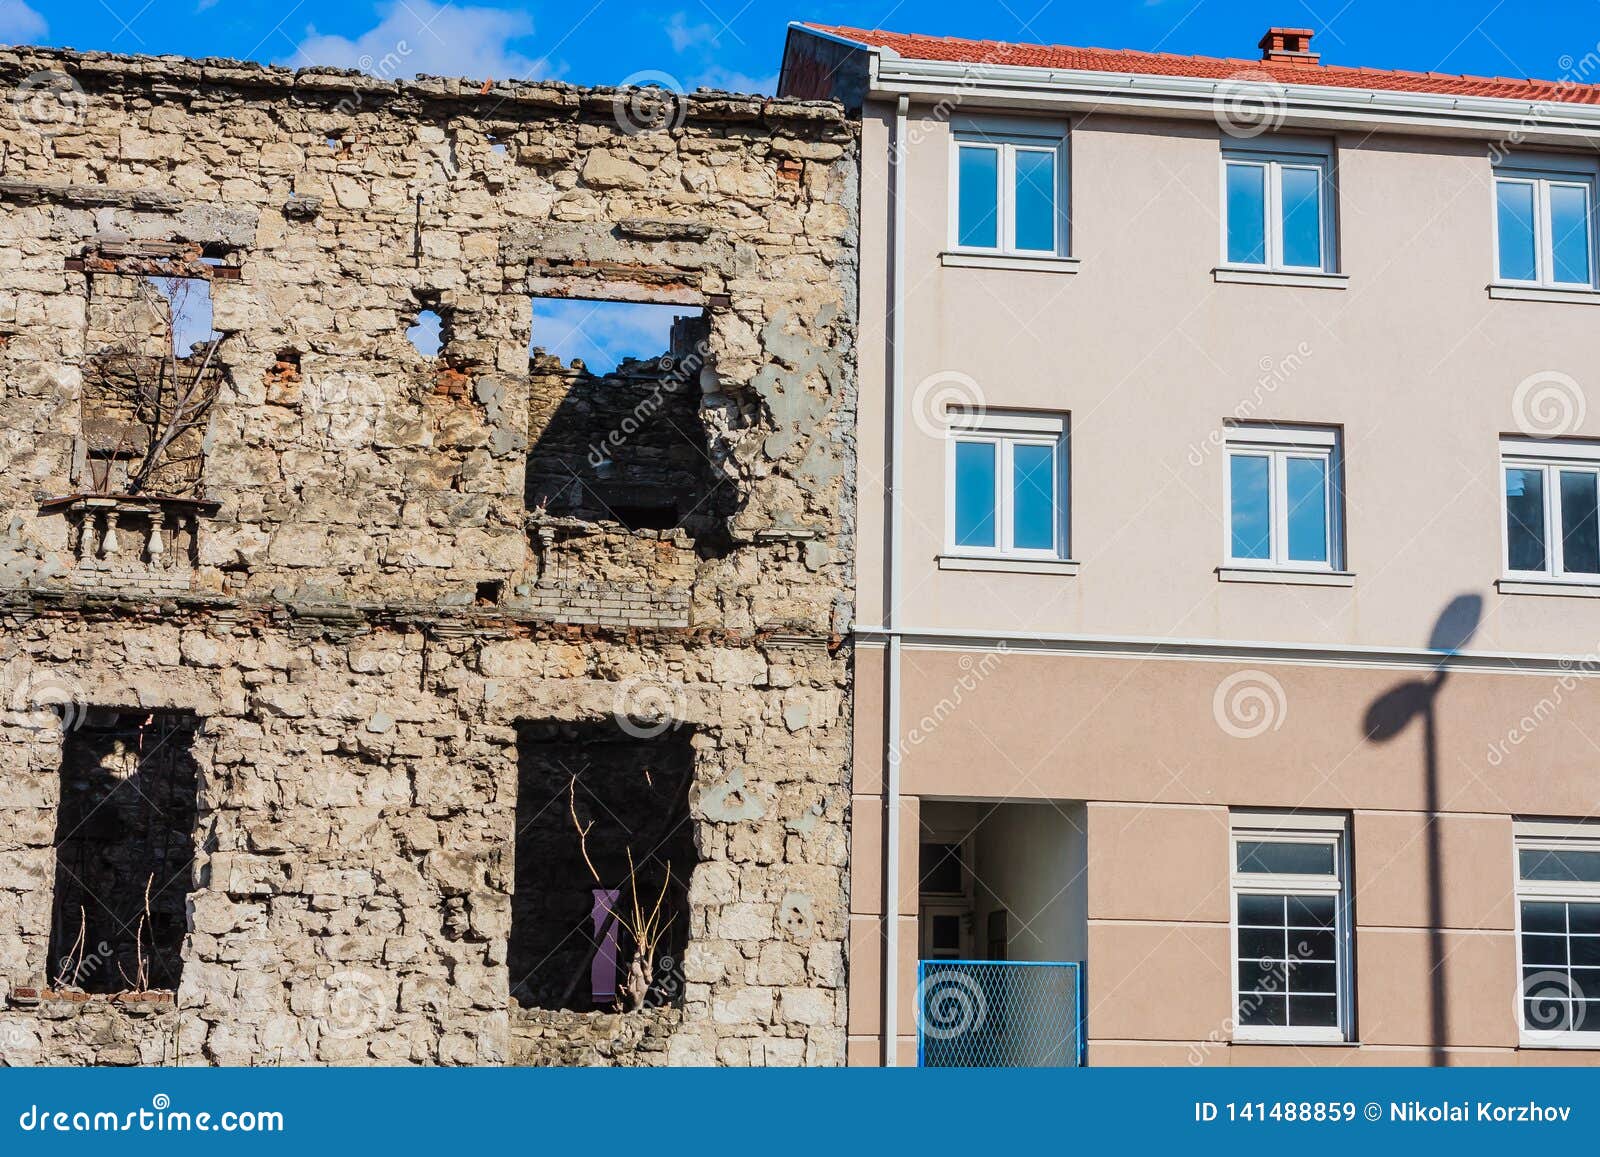 abandoned building, detroyed during bosnian war at bulevar street in mostar city, bosnia and herzegovina